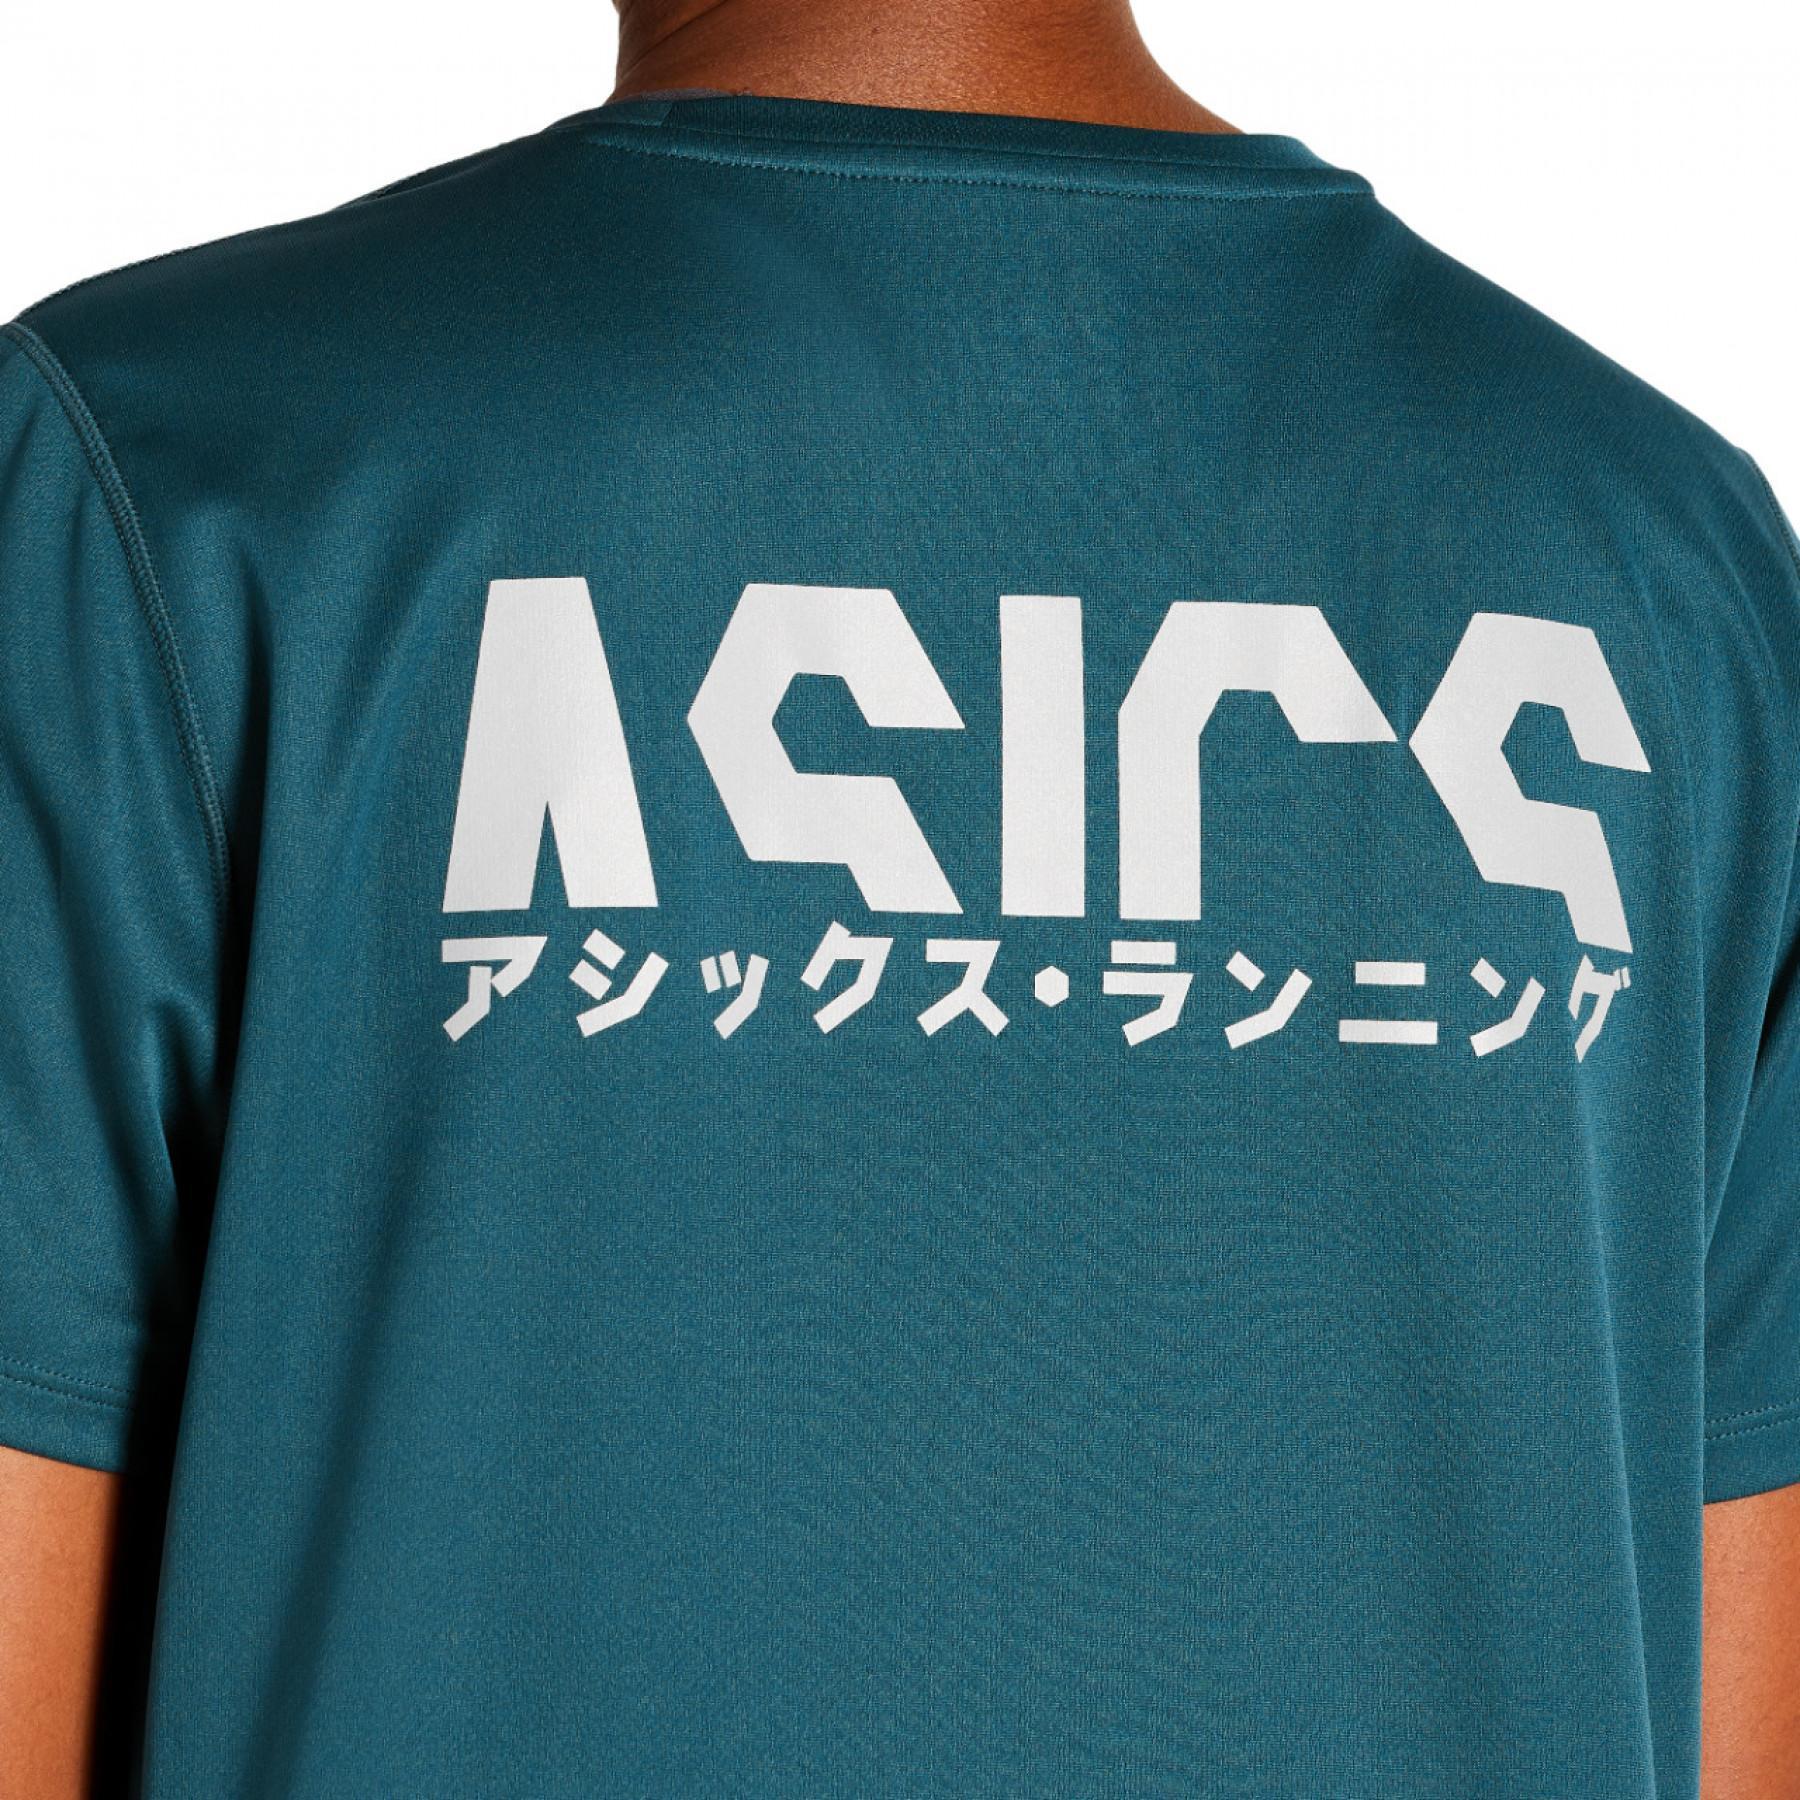 Camiseta mujer Asics Katakana